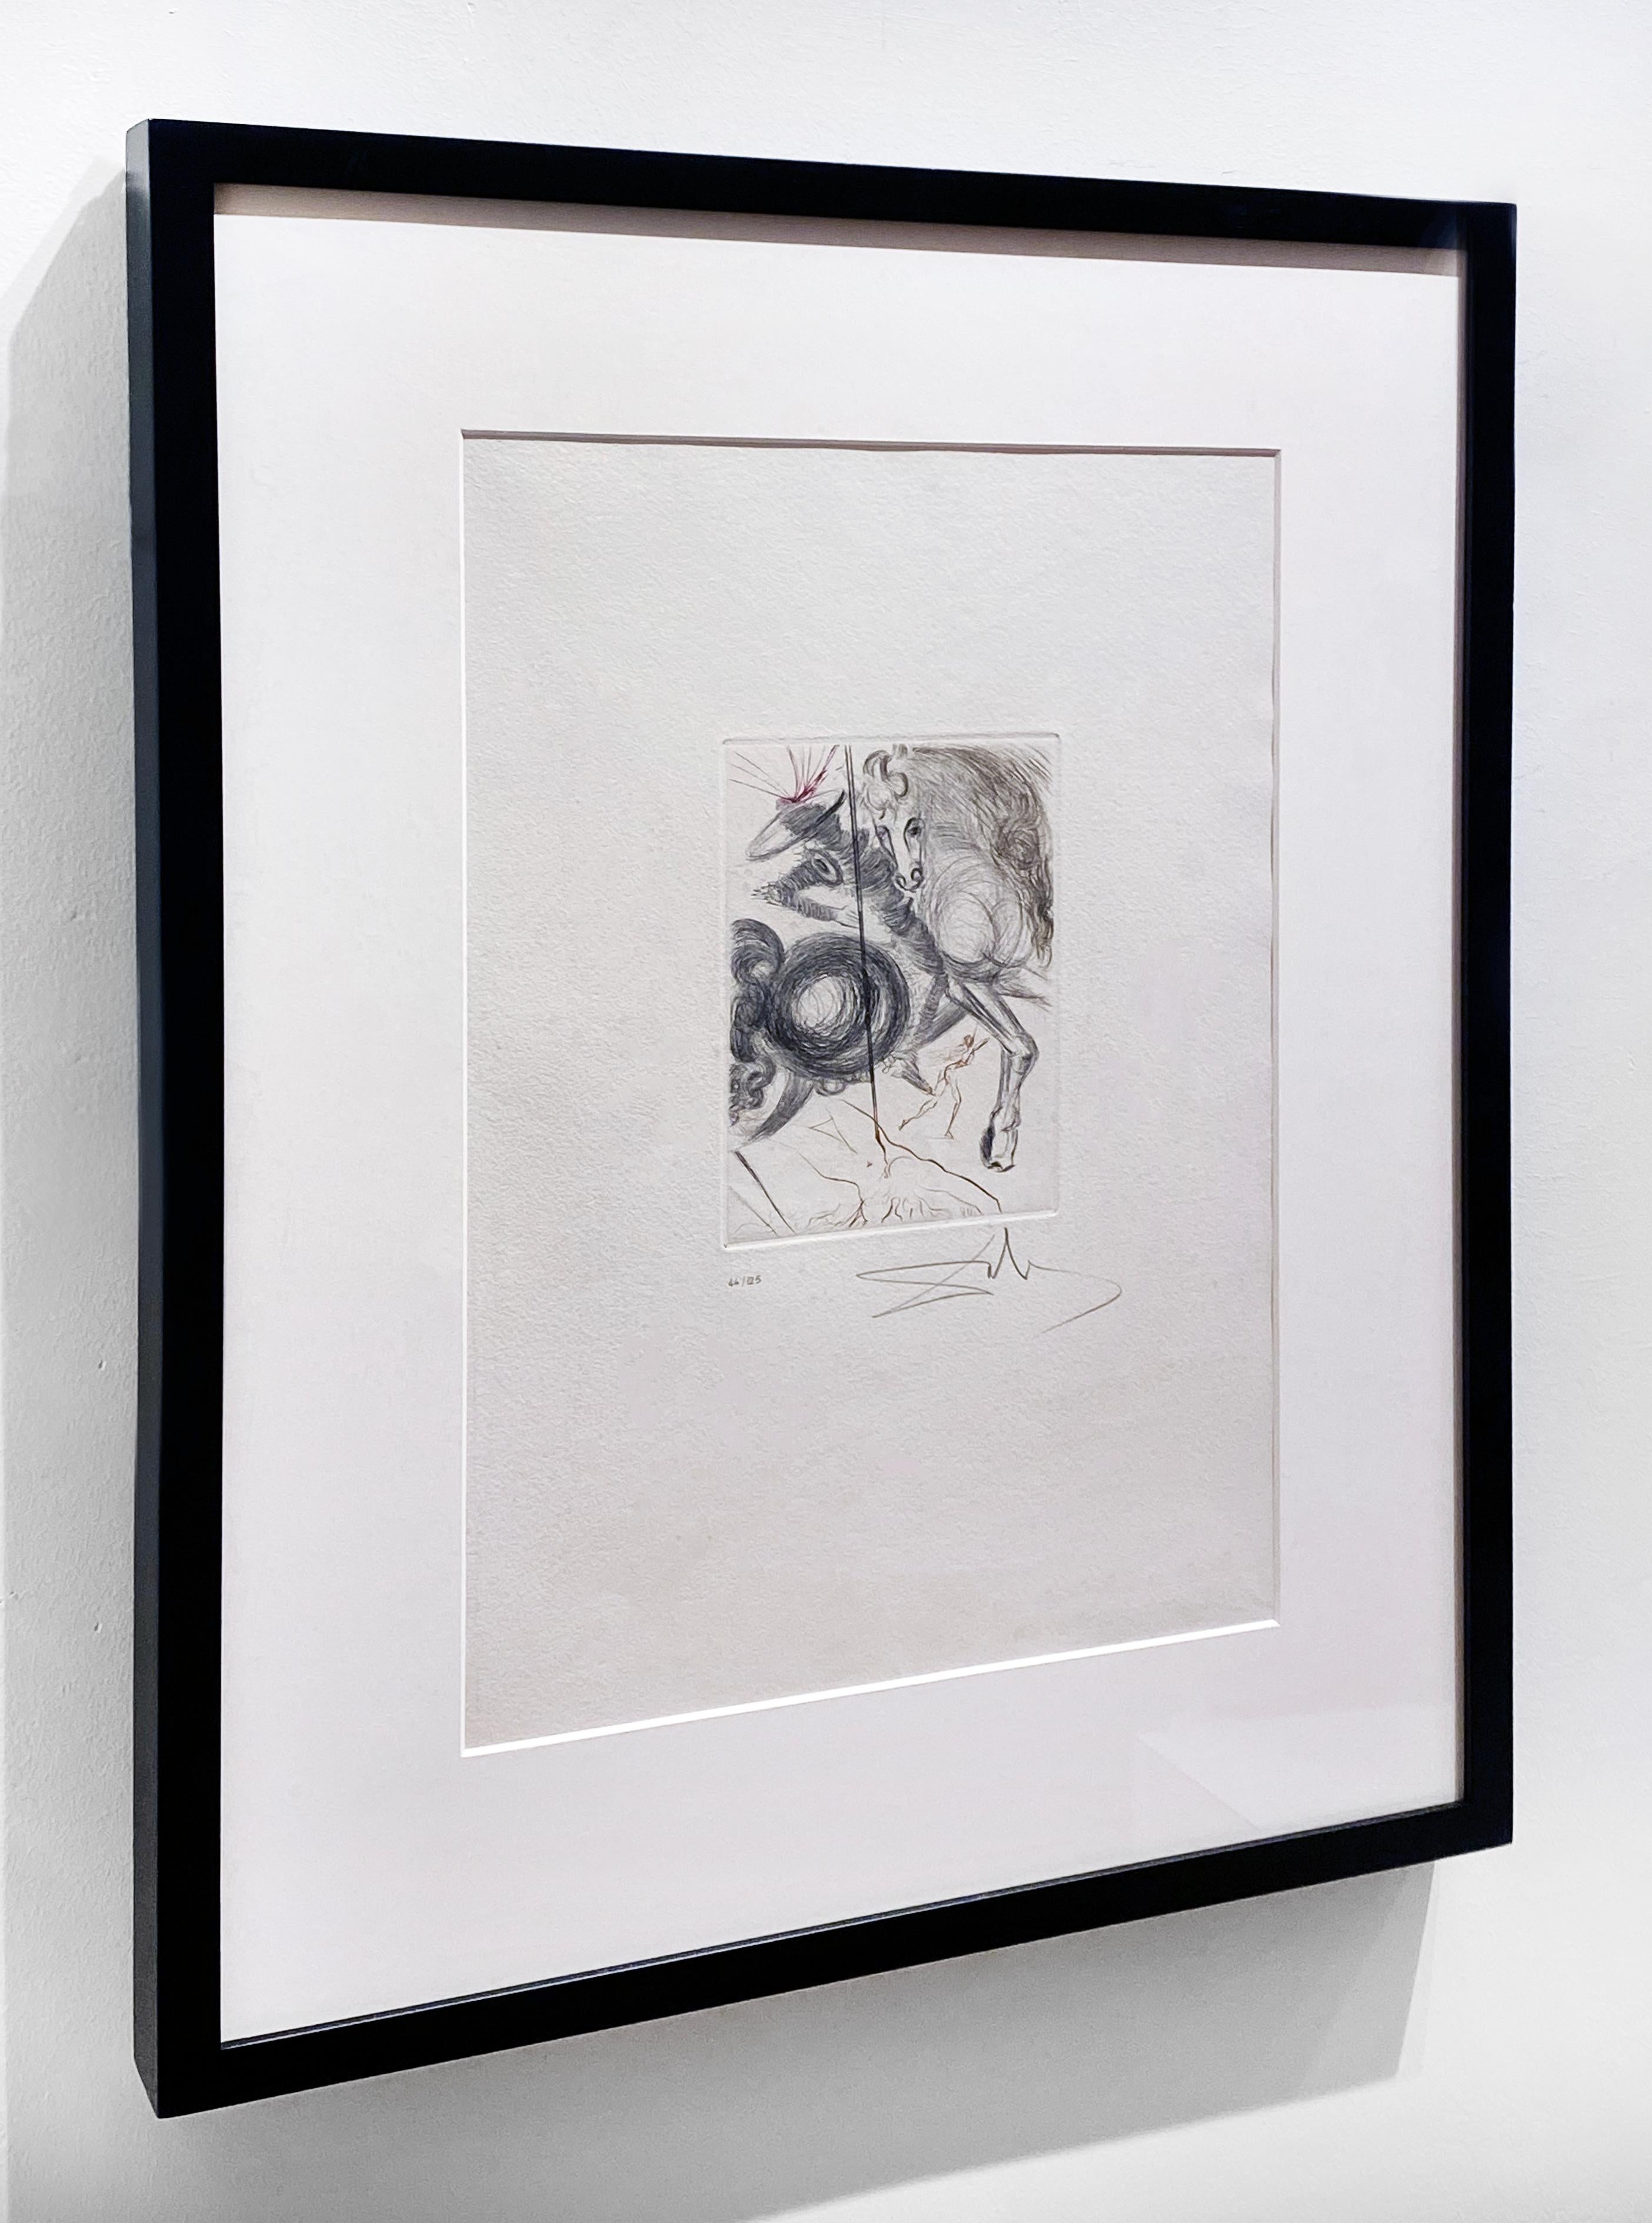 Artist:  Dali, Salvador
Title:  L’enfer des Beautes Cruelles
Series:  Le Decameron
Date:  1972
Medium:  drypoint printed in color
Framed Dimensions:  25.5